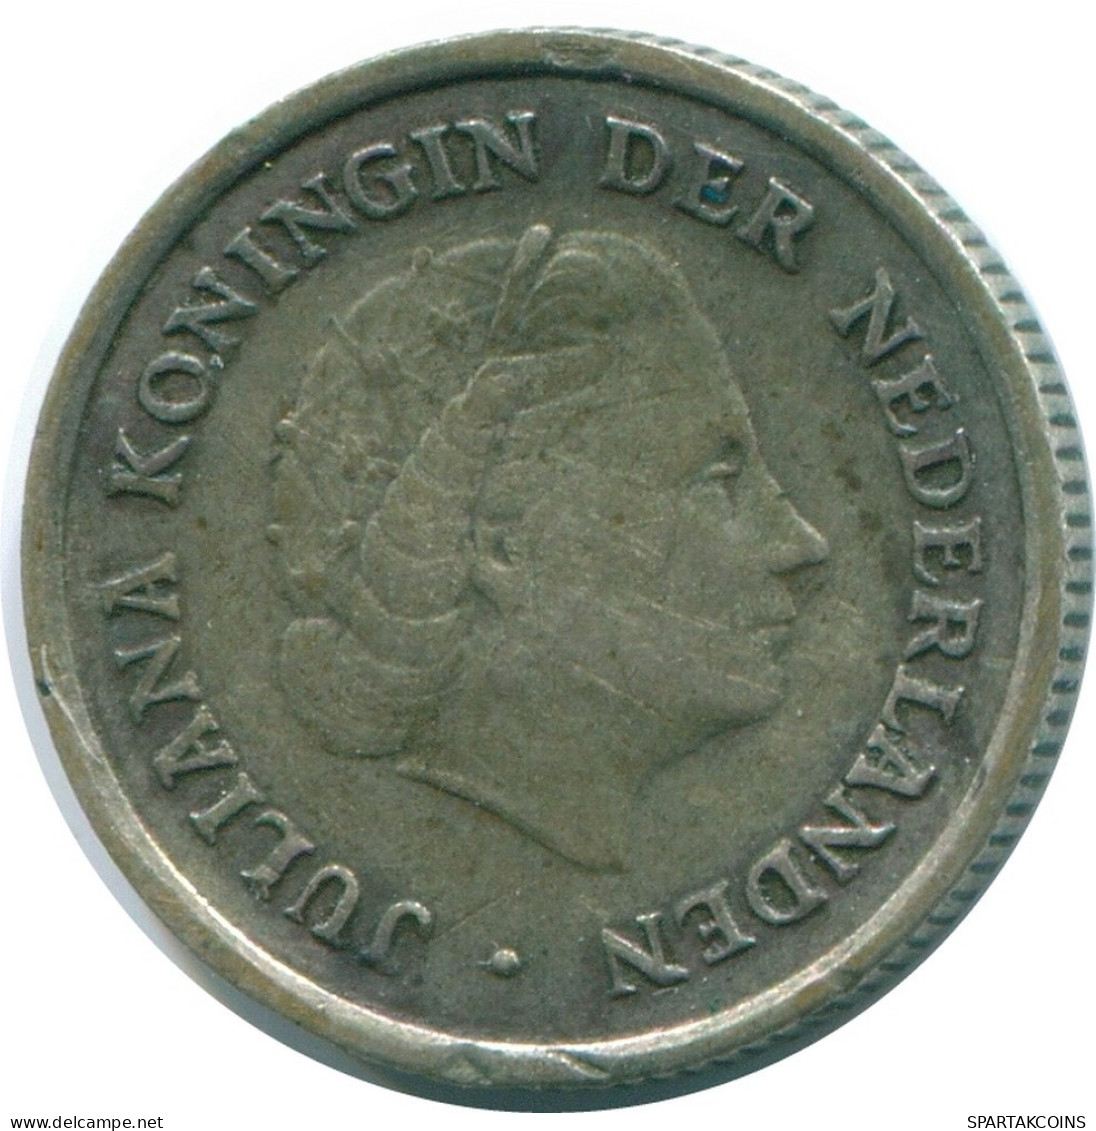 1/10 GULDEN 1962 NETHERLANDS ANTILLES SILVER Colonial Coin #NL12431.3.U.A - Netherlands Antilles